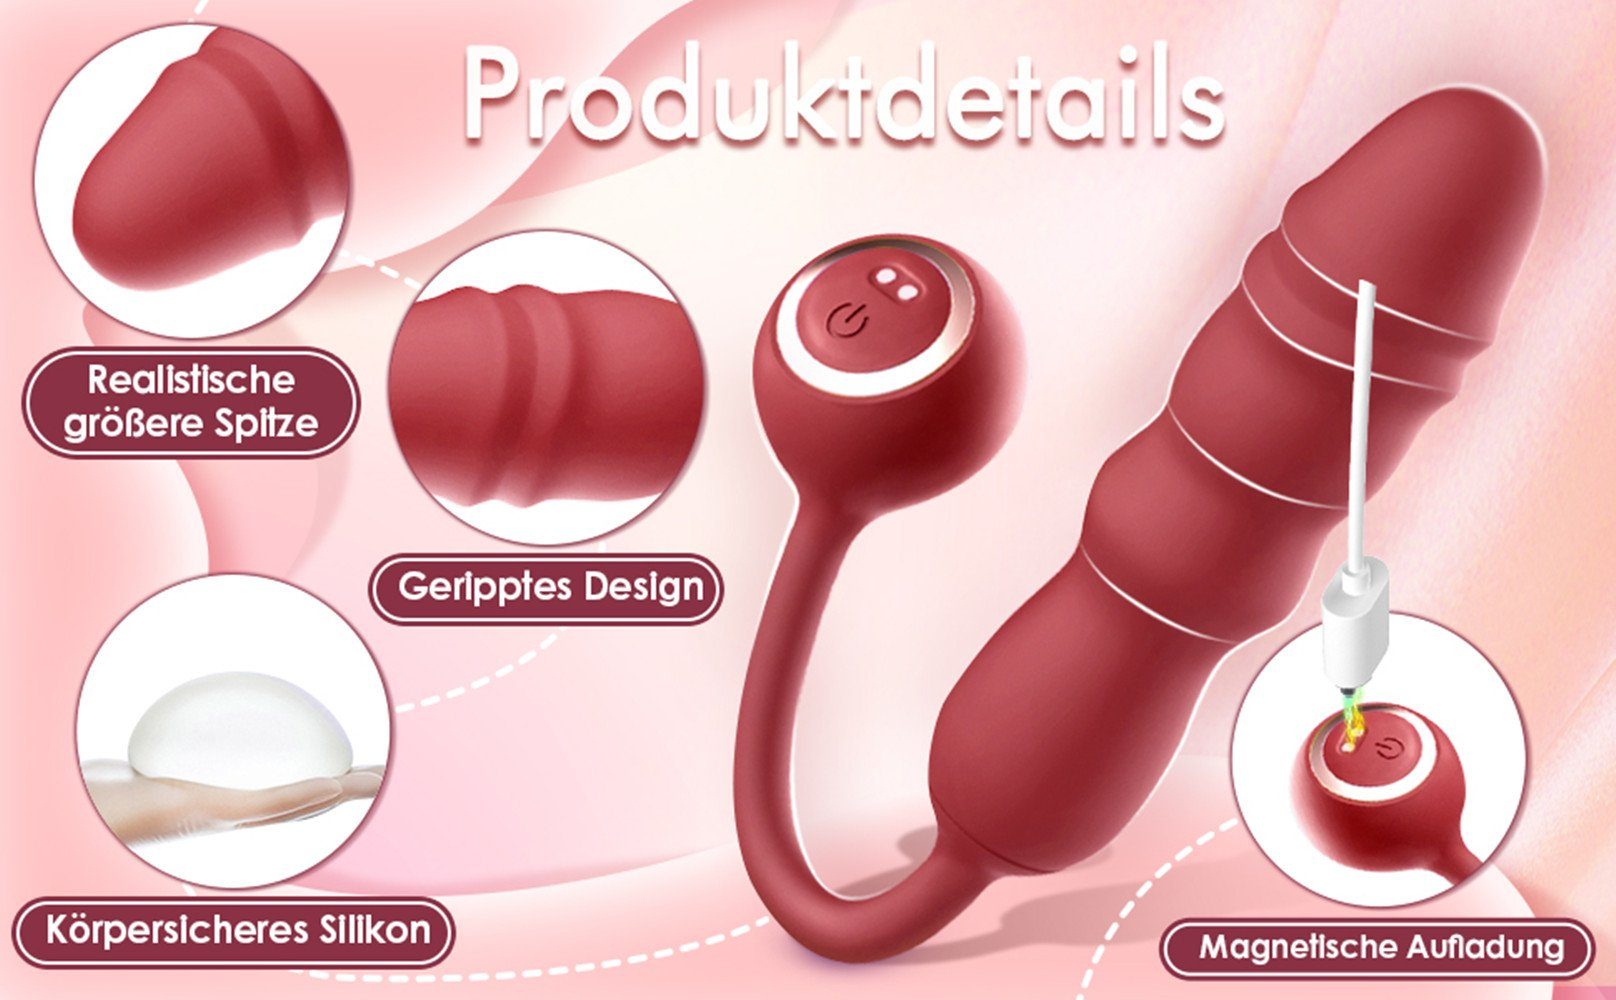 G-Punkt-Vibrator mit Vibrationsmodi Starken 9 Vibrator Analvibrator und Stimulator, 10 Klitoris autolock Bullet Nippel Stoßfunktion weinrot